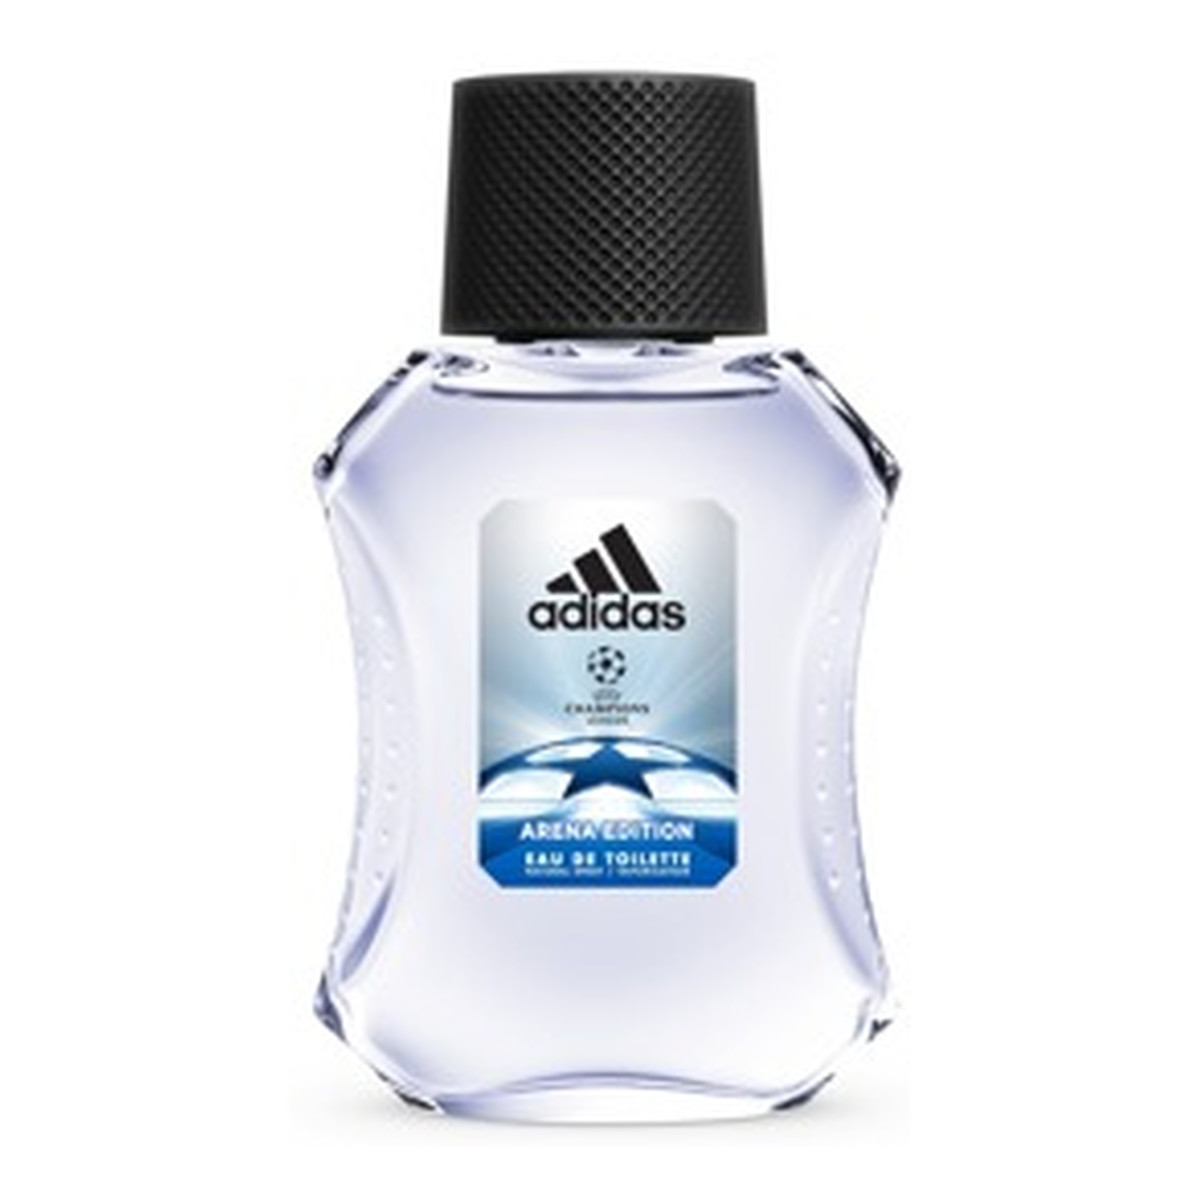 Adidas Uefa Champions League Arena Edition woda toaletowa 50ml